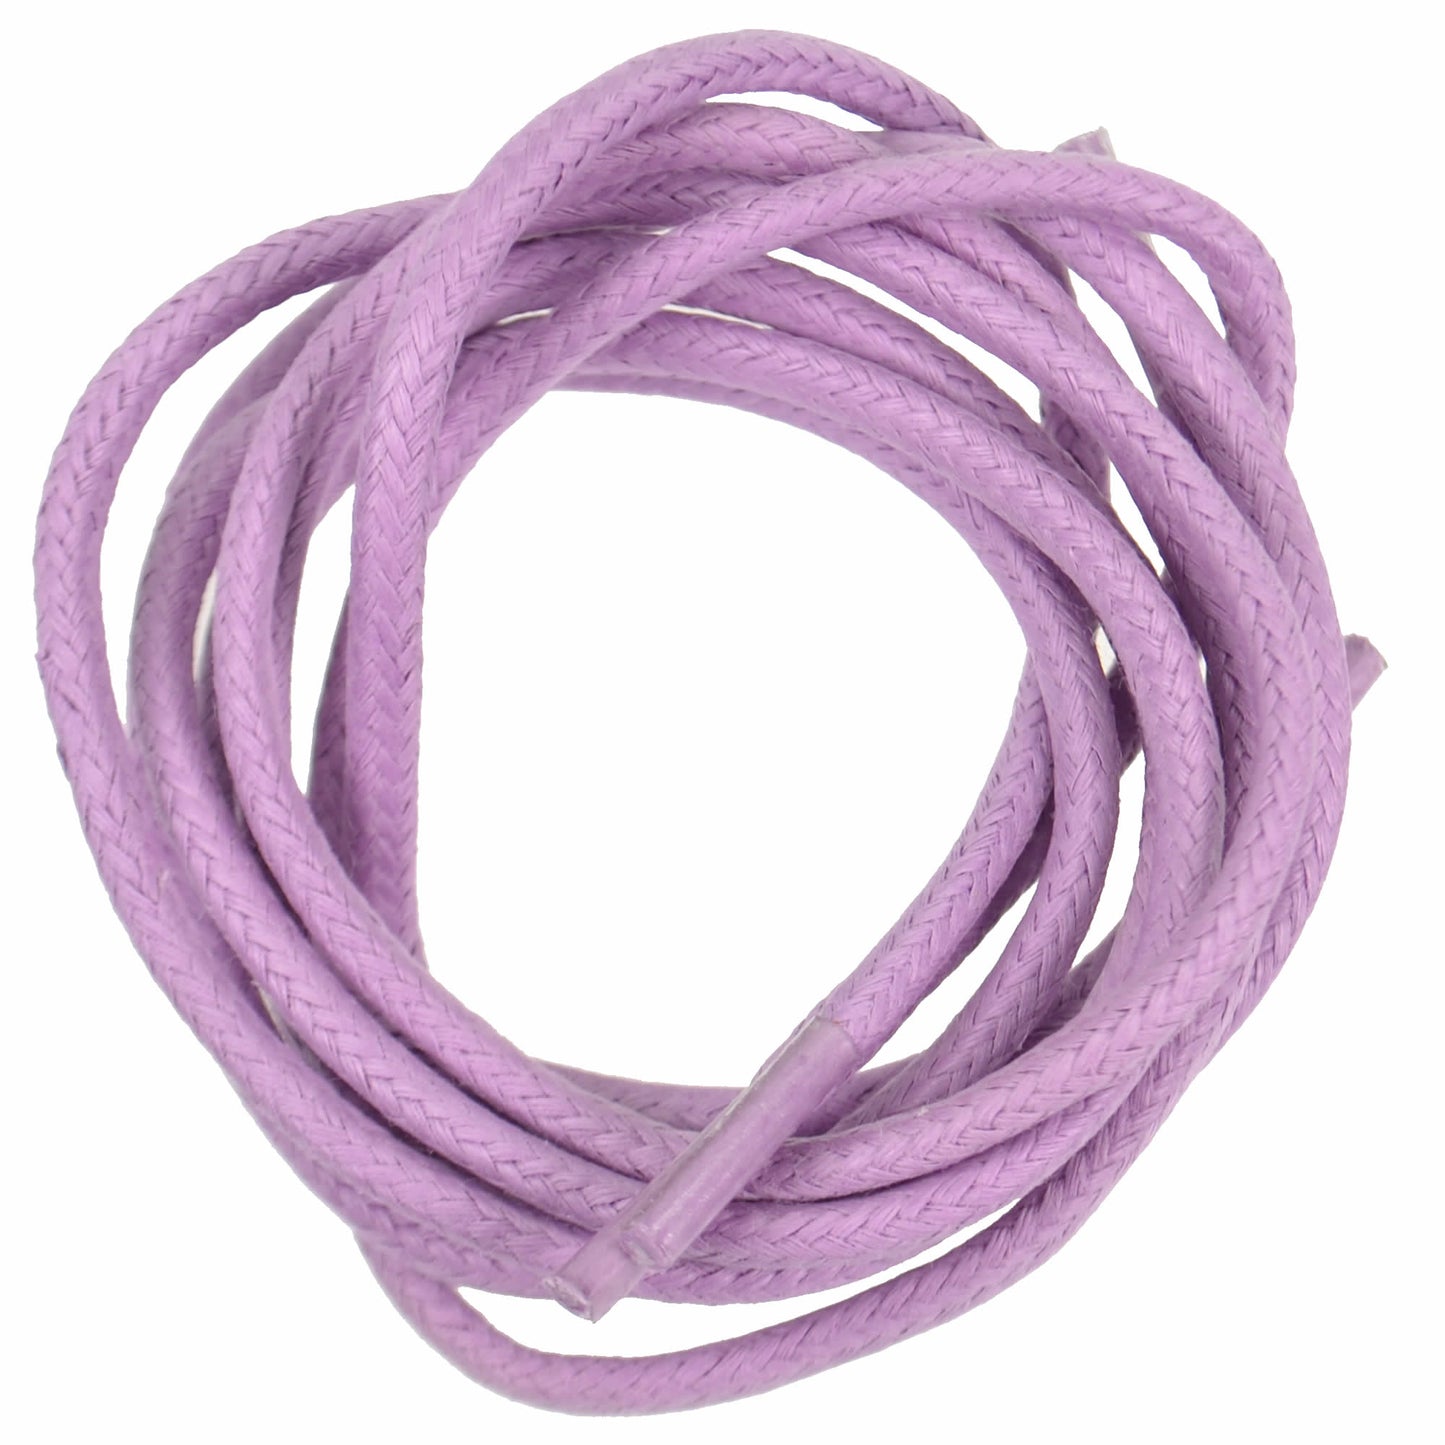 75cm Wax Round Shoe Laces - Lilac 3mm